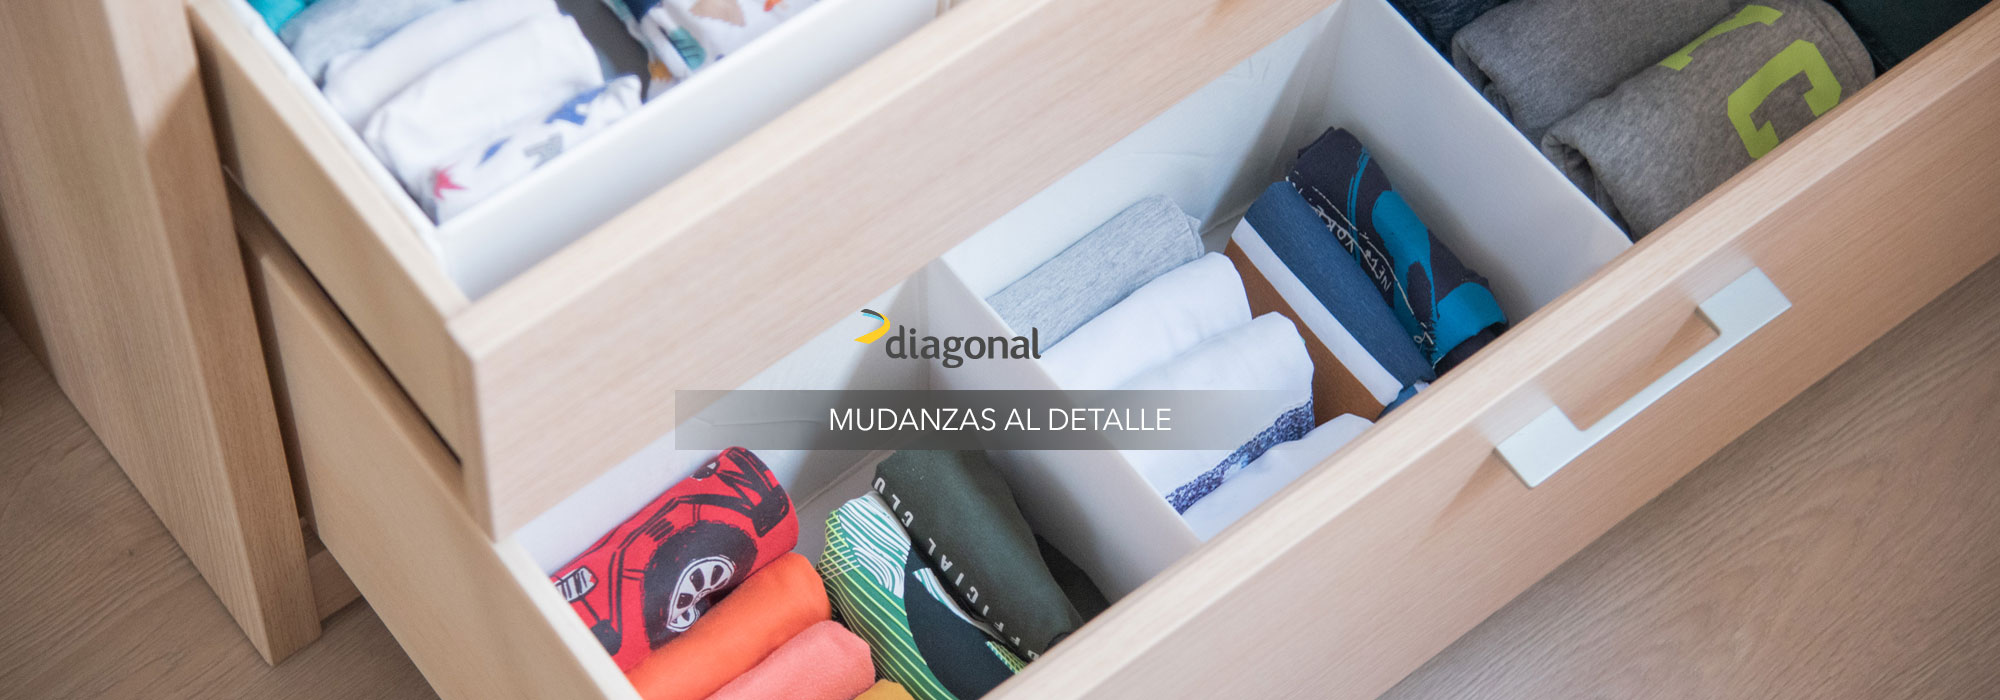 (c) Mudanzasdiagonal.com